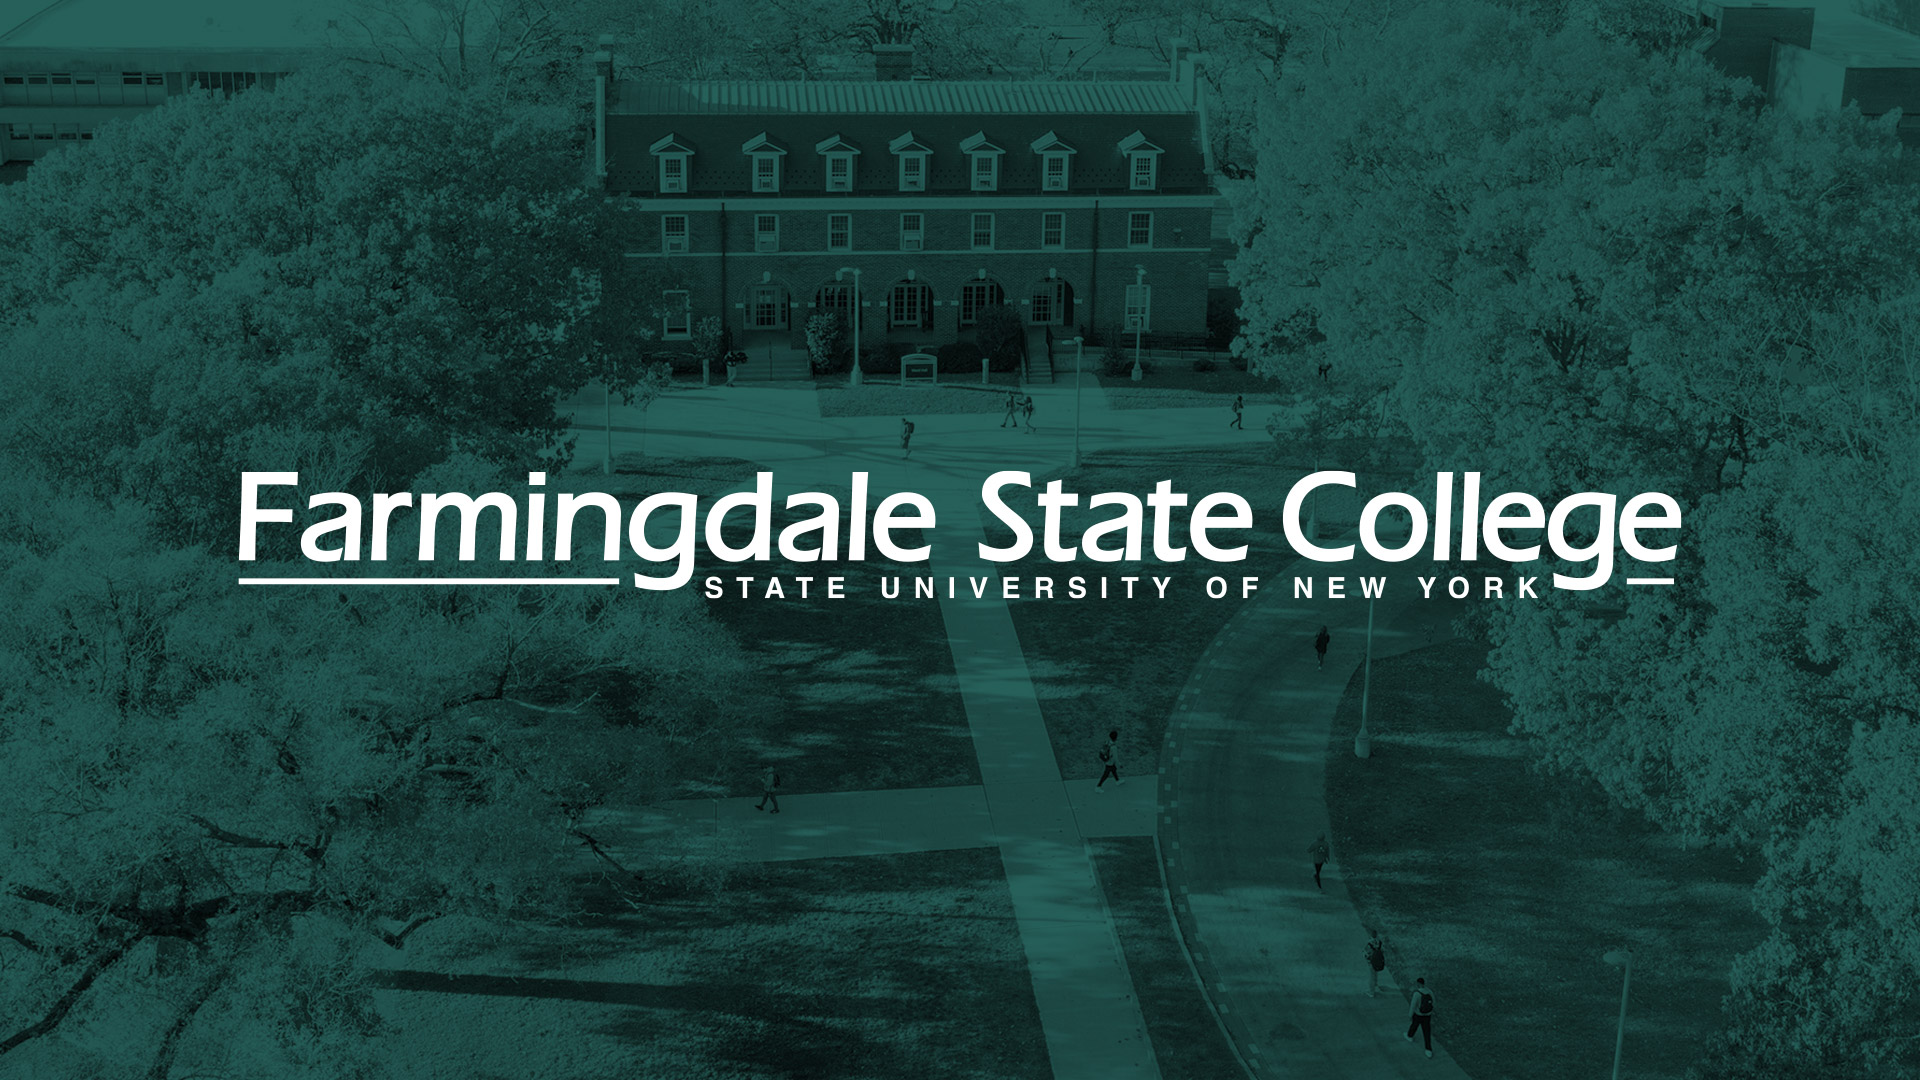 wallpaper farmingdale state college